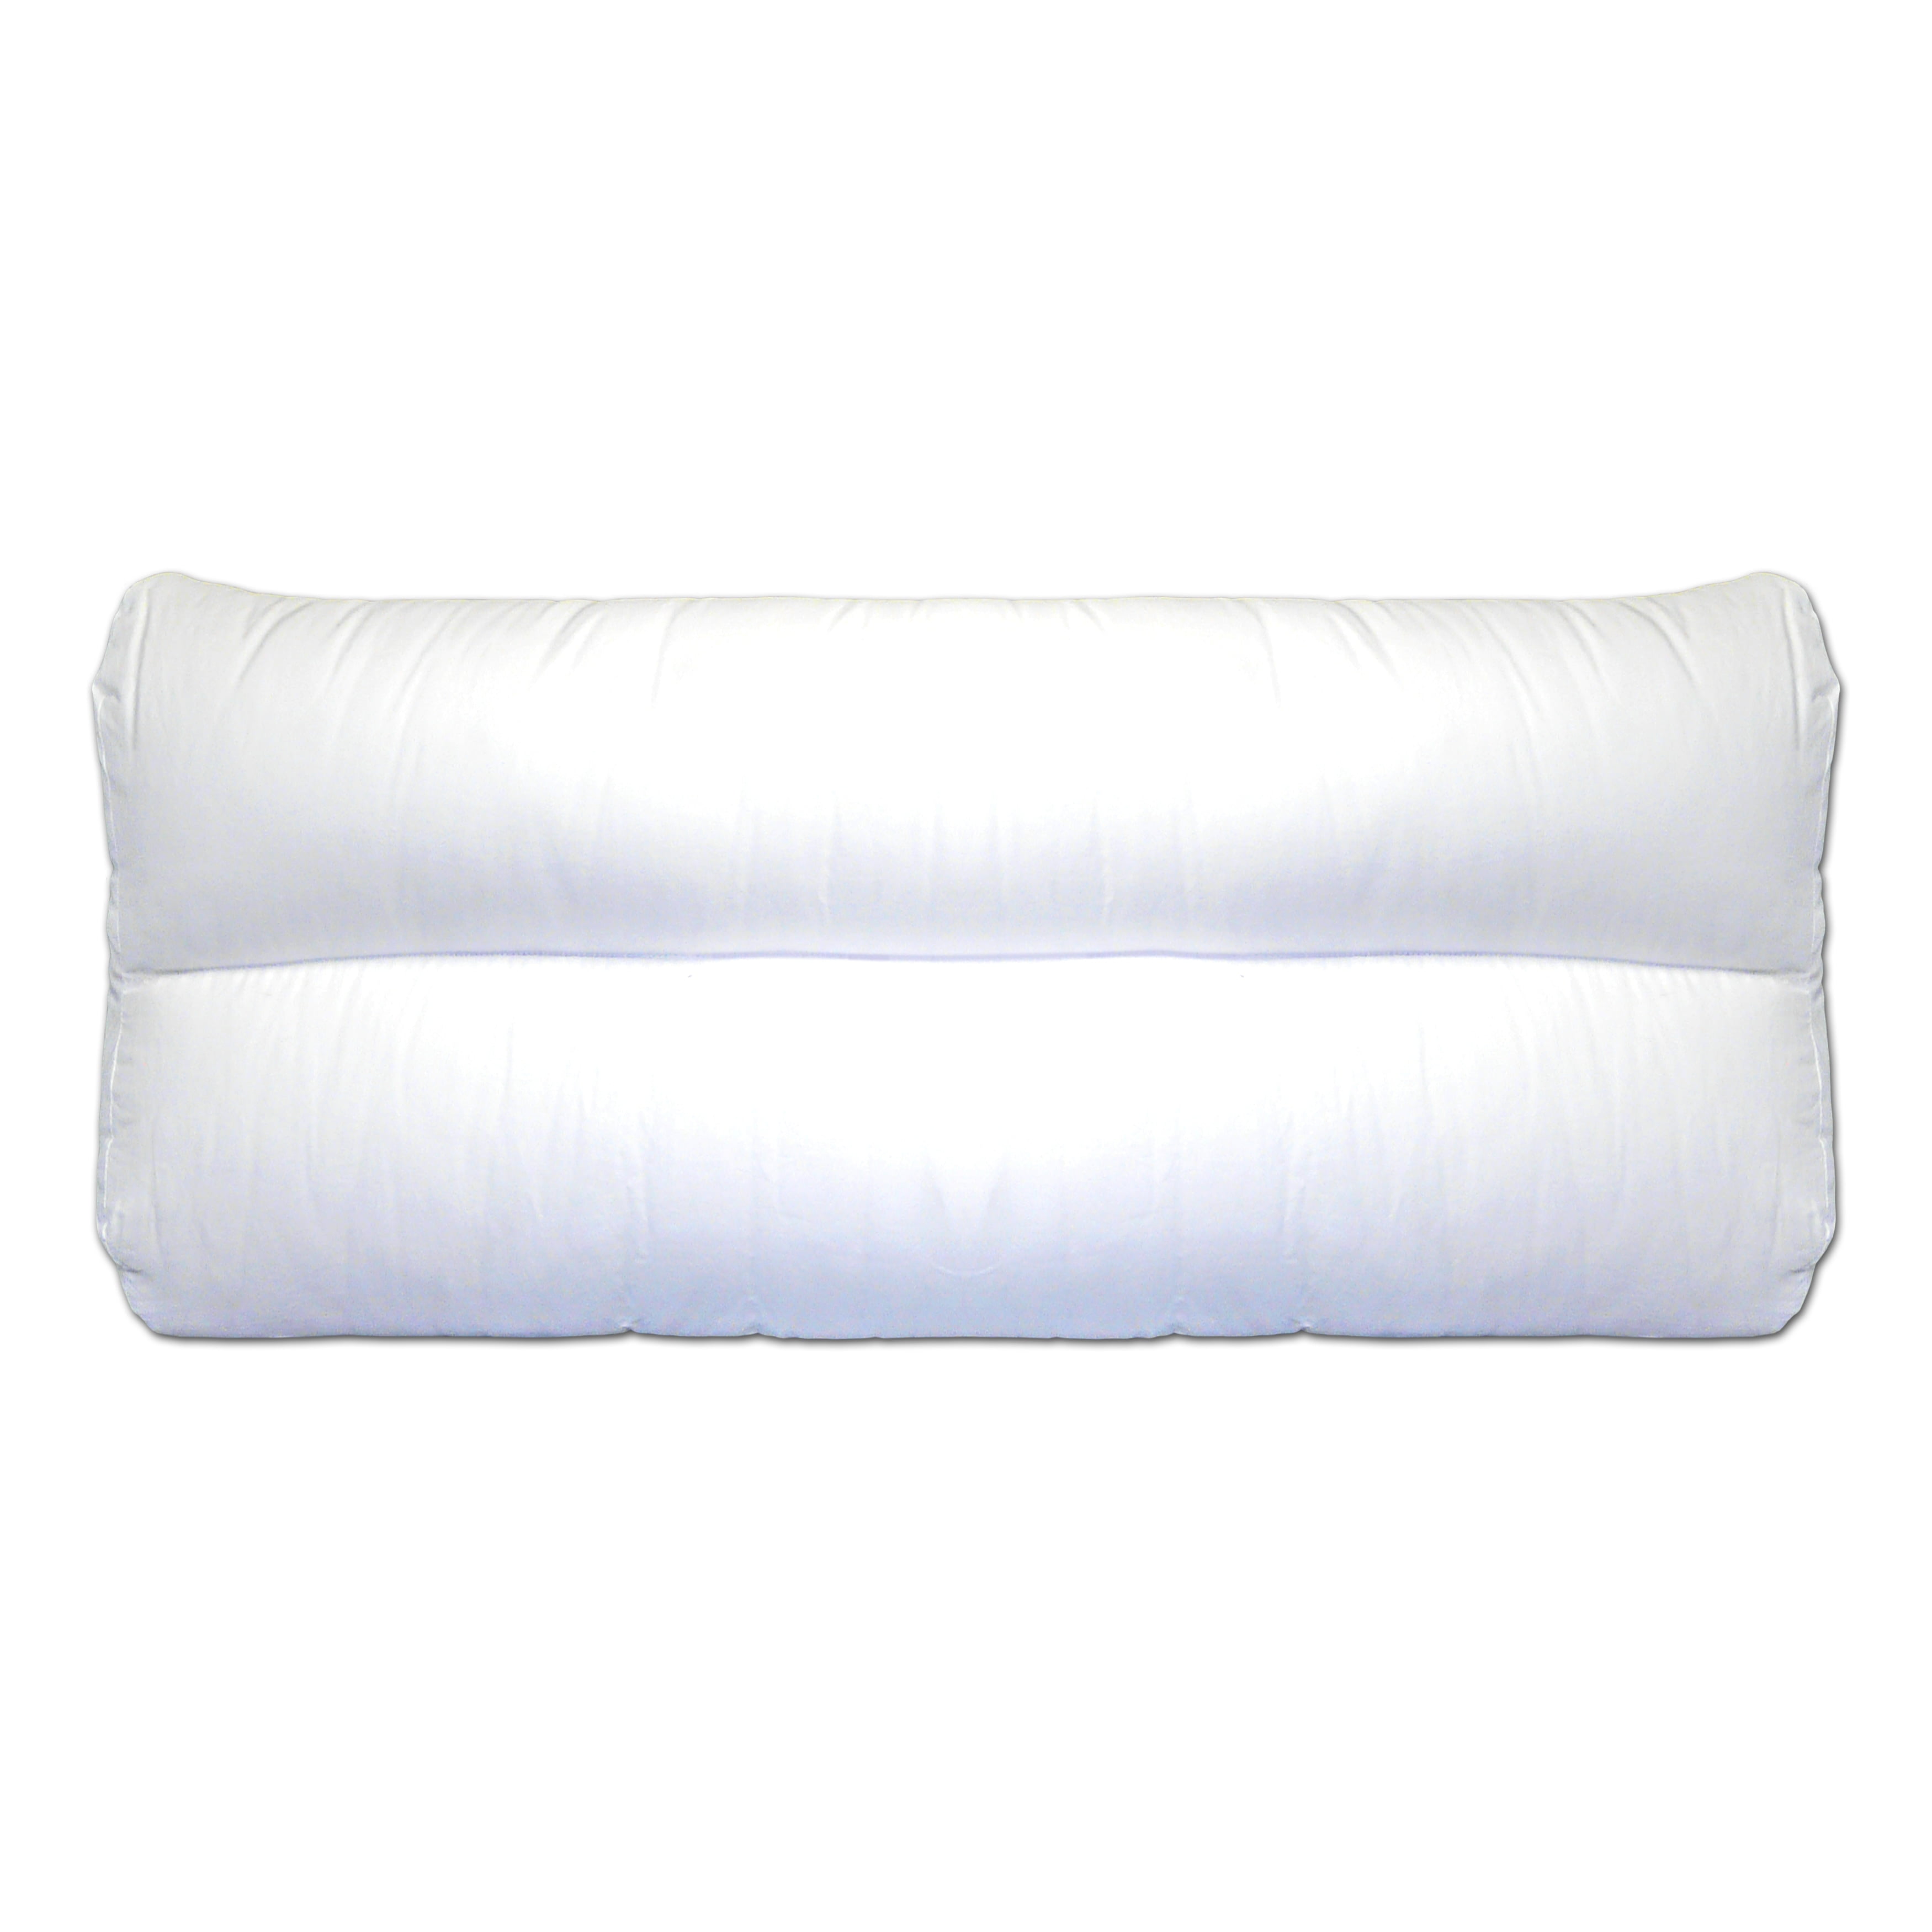 New Innomax Angel Silk Shapable Contour Pillow 